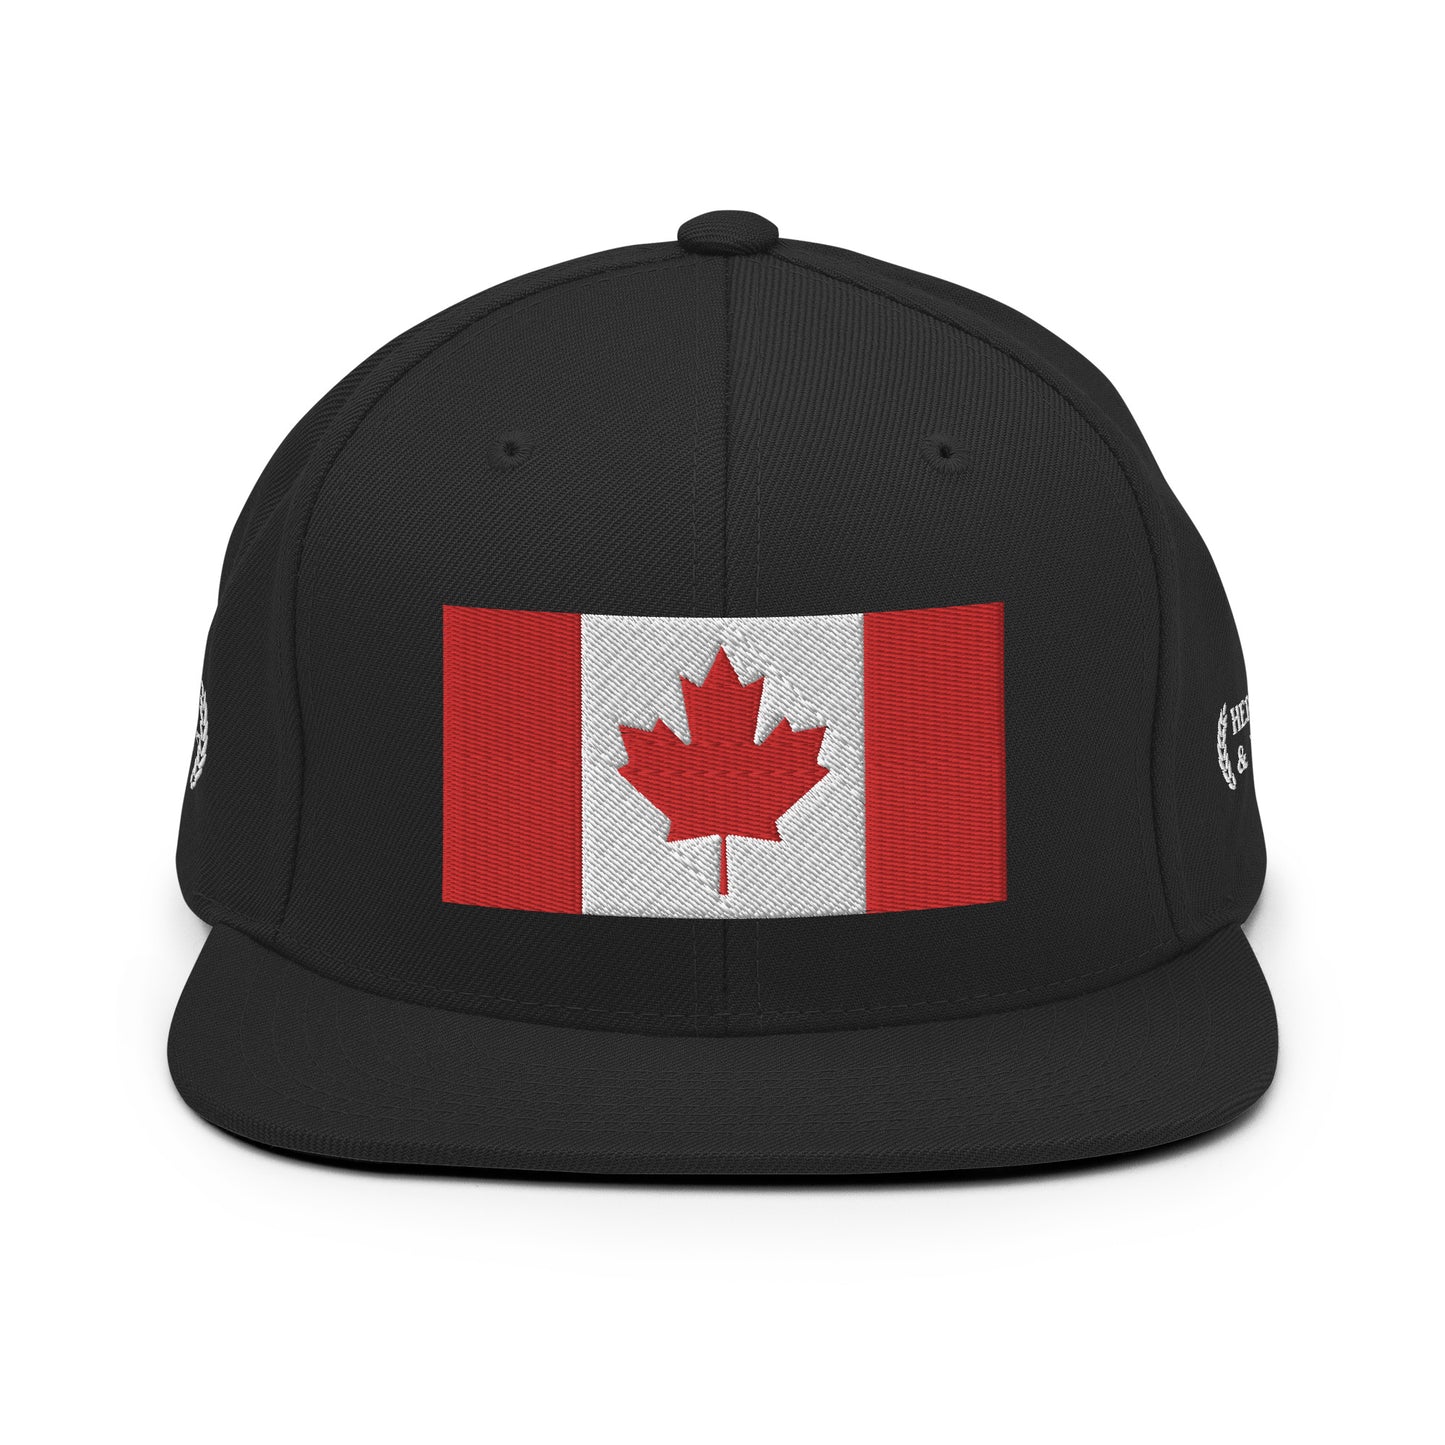 Heritage & Honor Snapback Cap 'Canada' 2